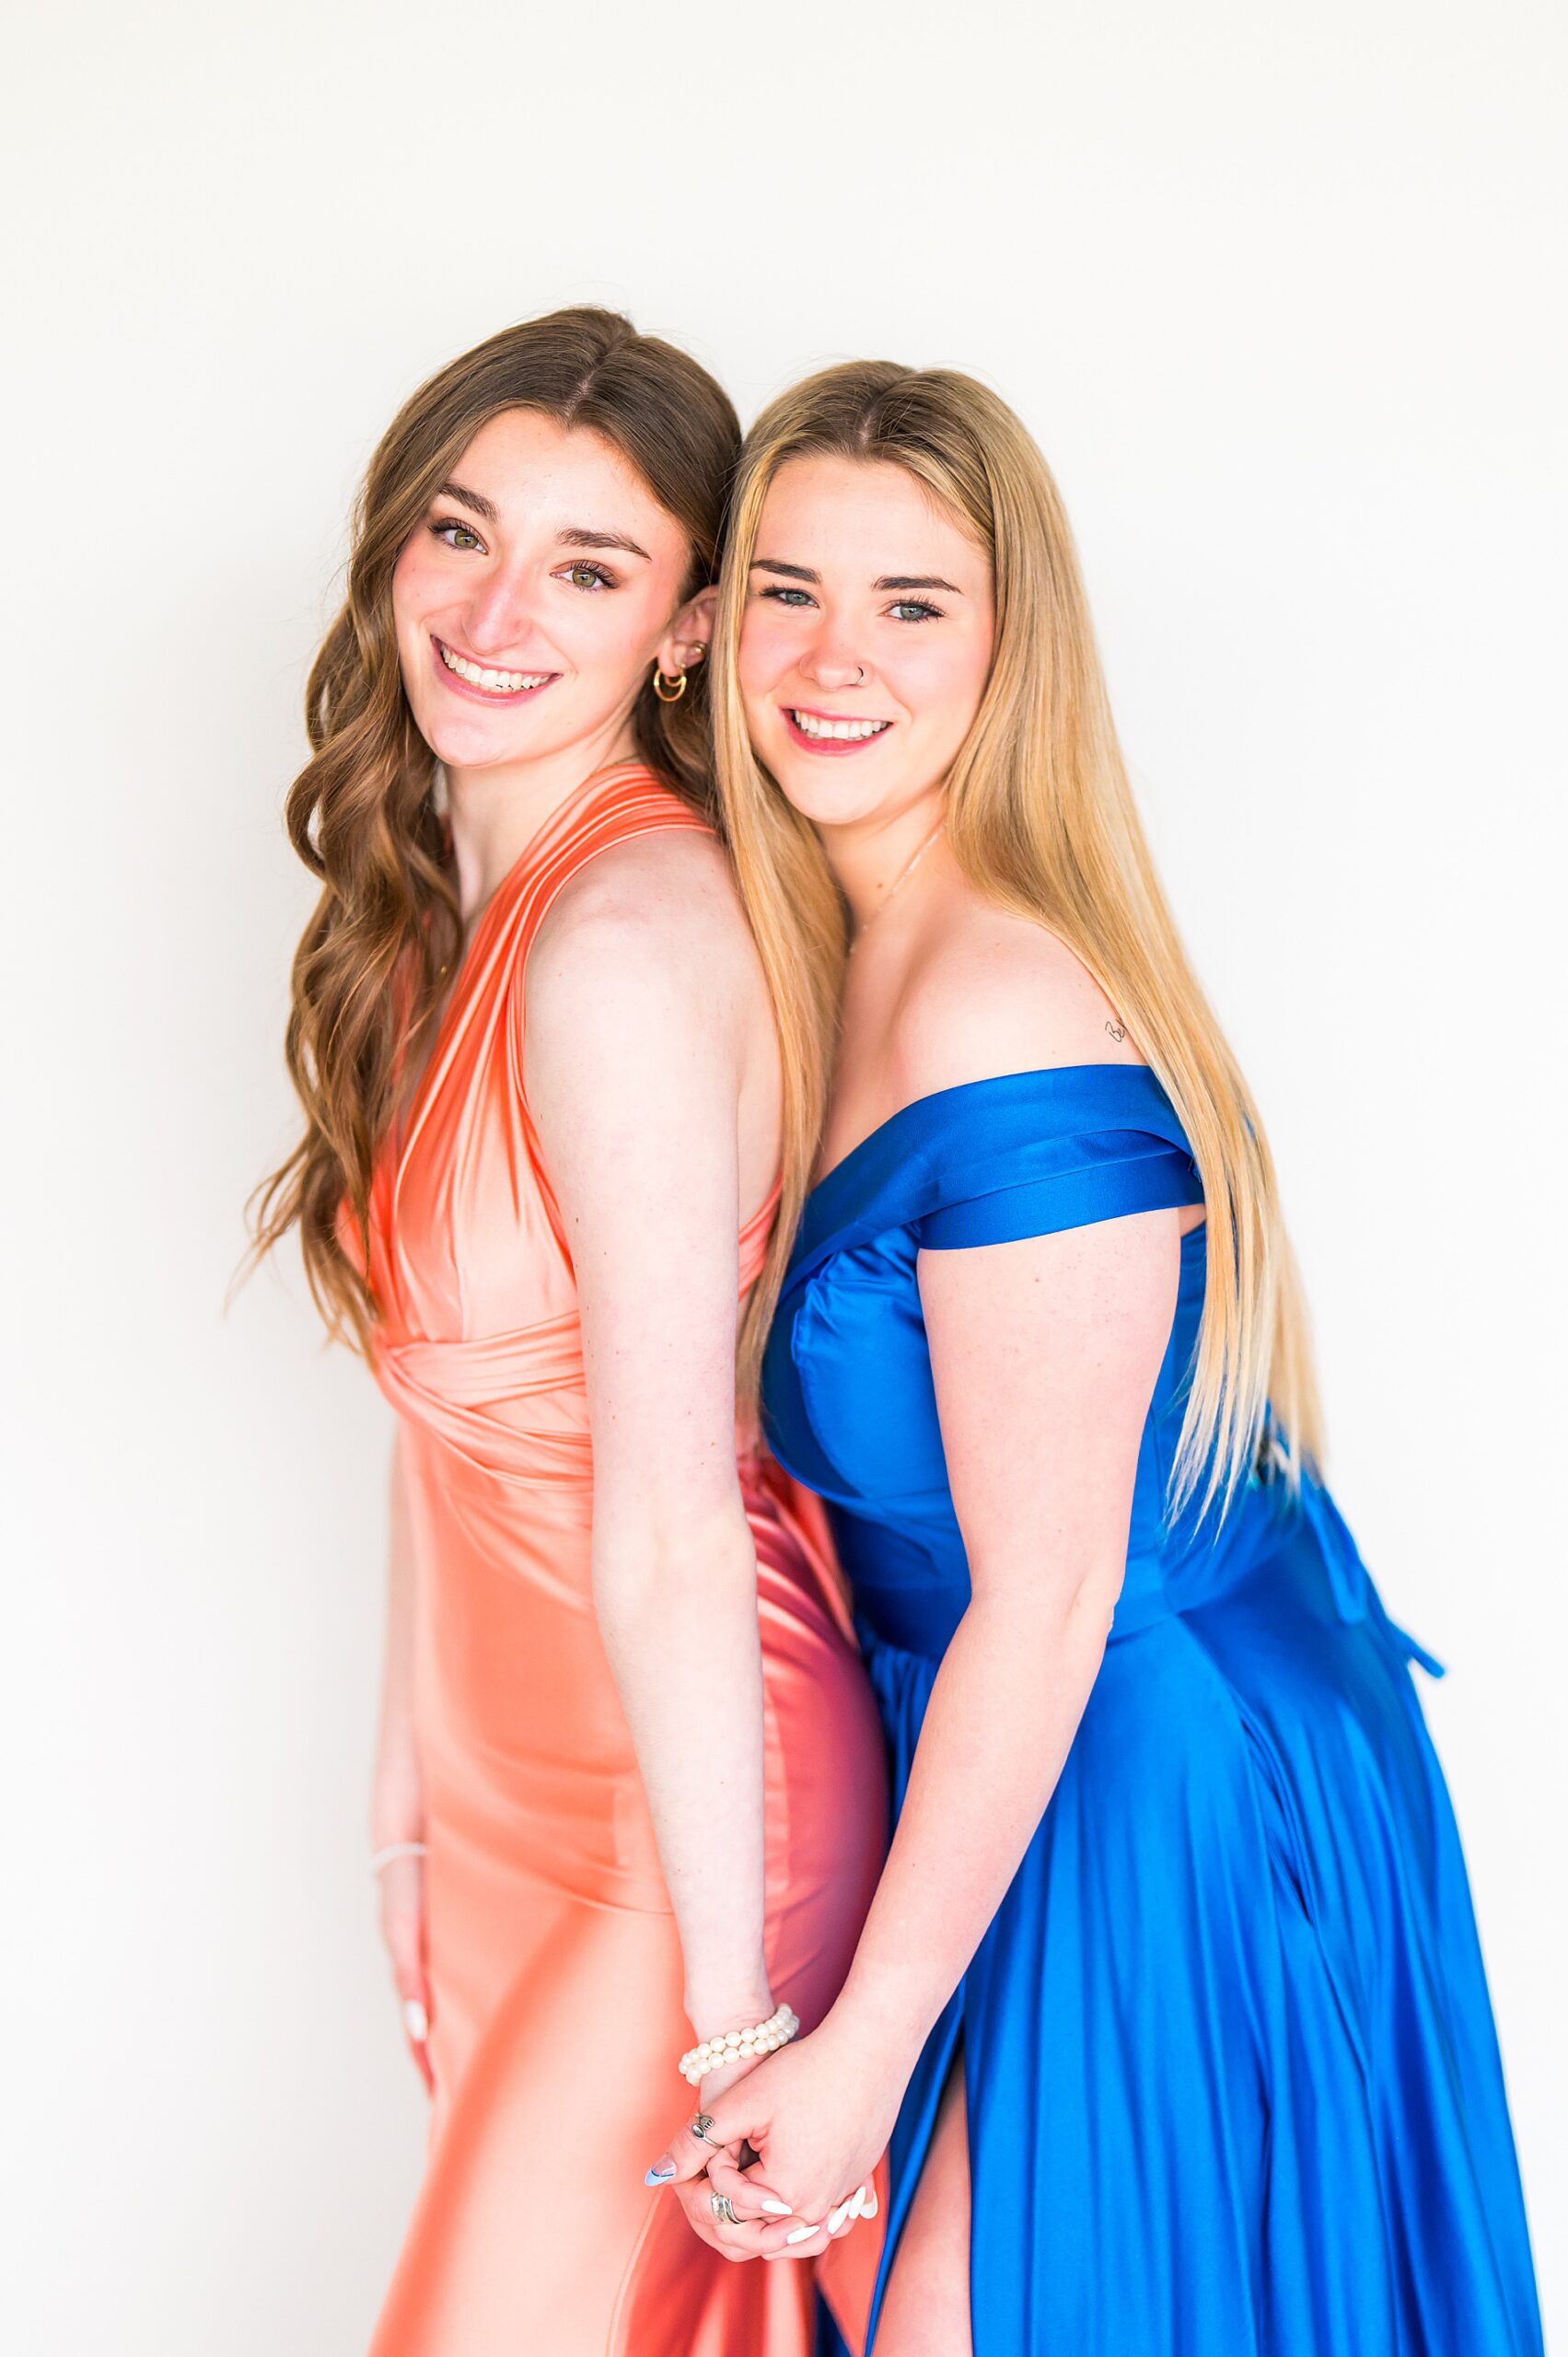 Senior spokesmodel team at Glamorous Prom-Themed Photoshoot